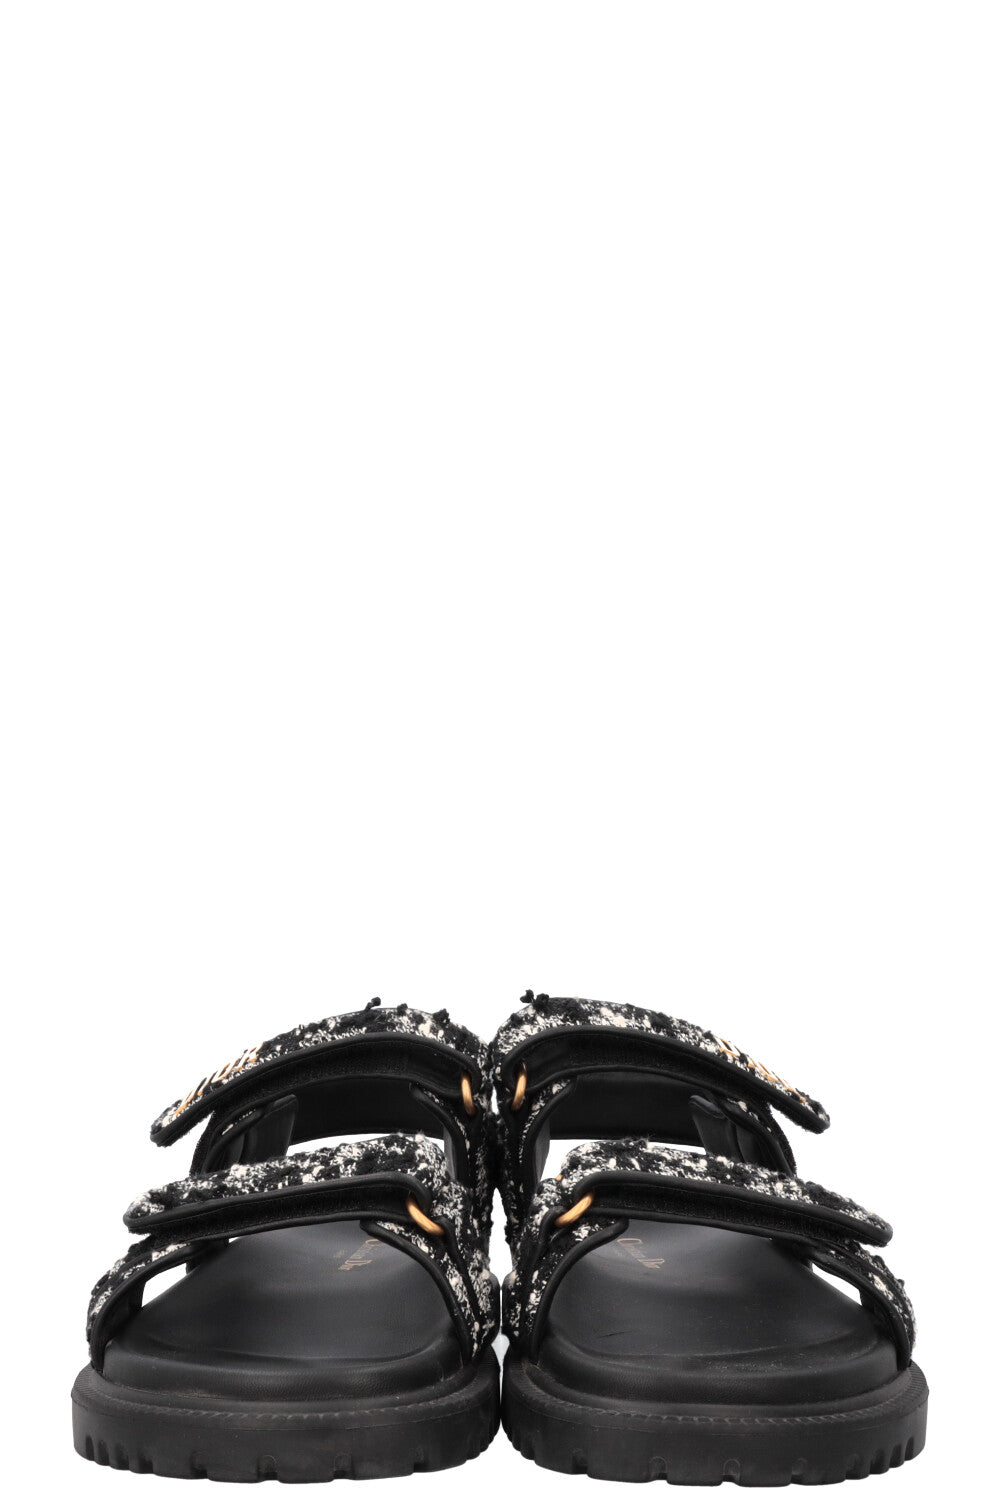 CHRISTIAN DIOR Dioract Tweed Sandals Black